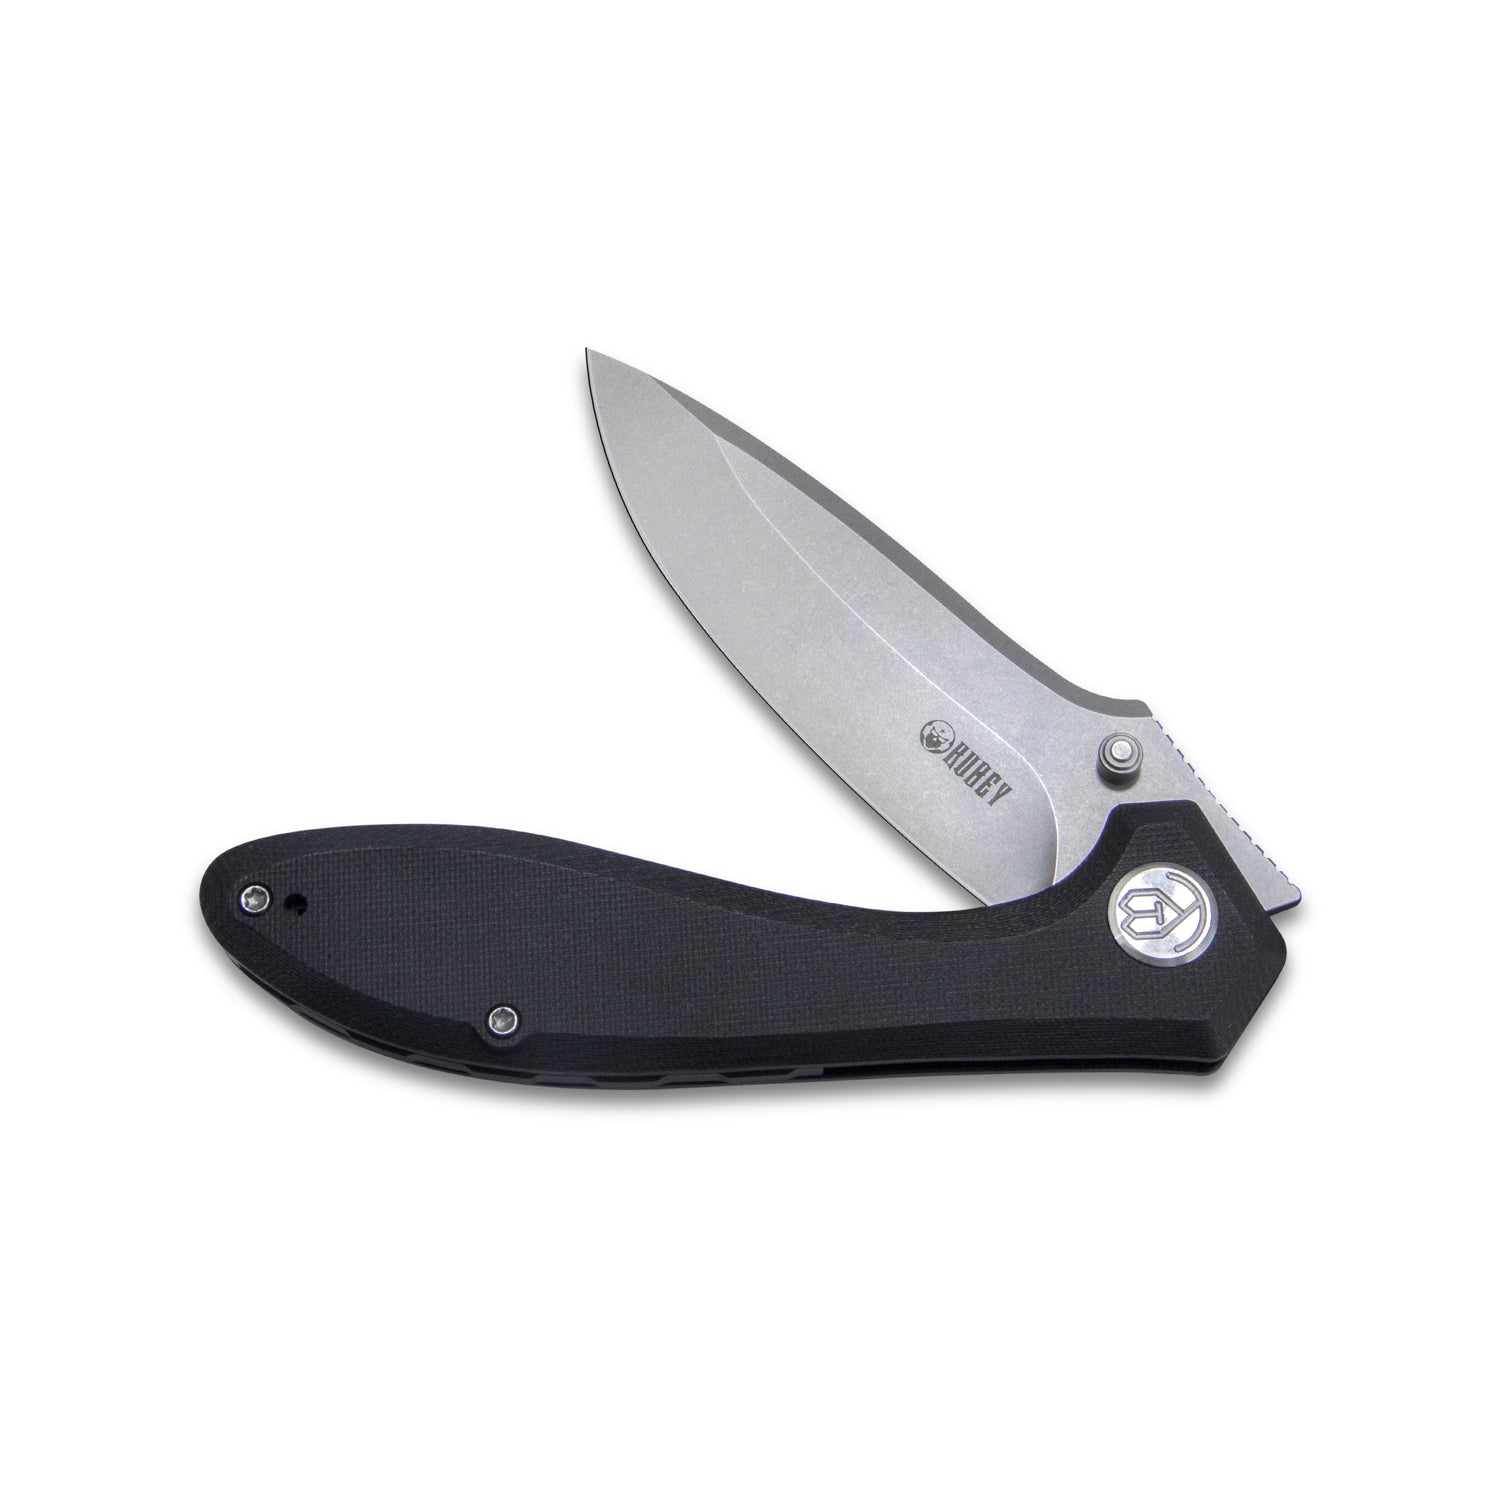 Kubey Ruckus Klappmesser Liner Lock Folding Knife Black G10 Handle 3.31" Bead Blasted AUS-10 KU314F